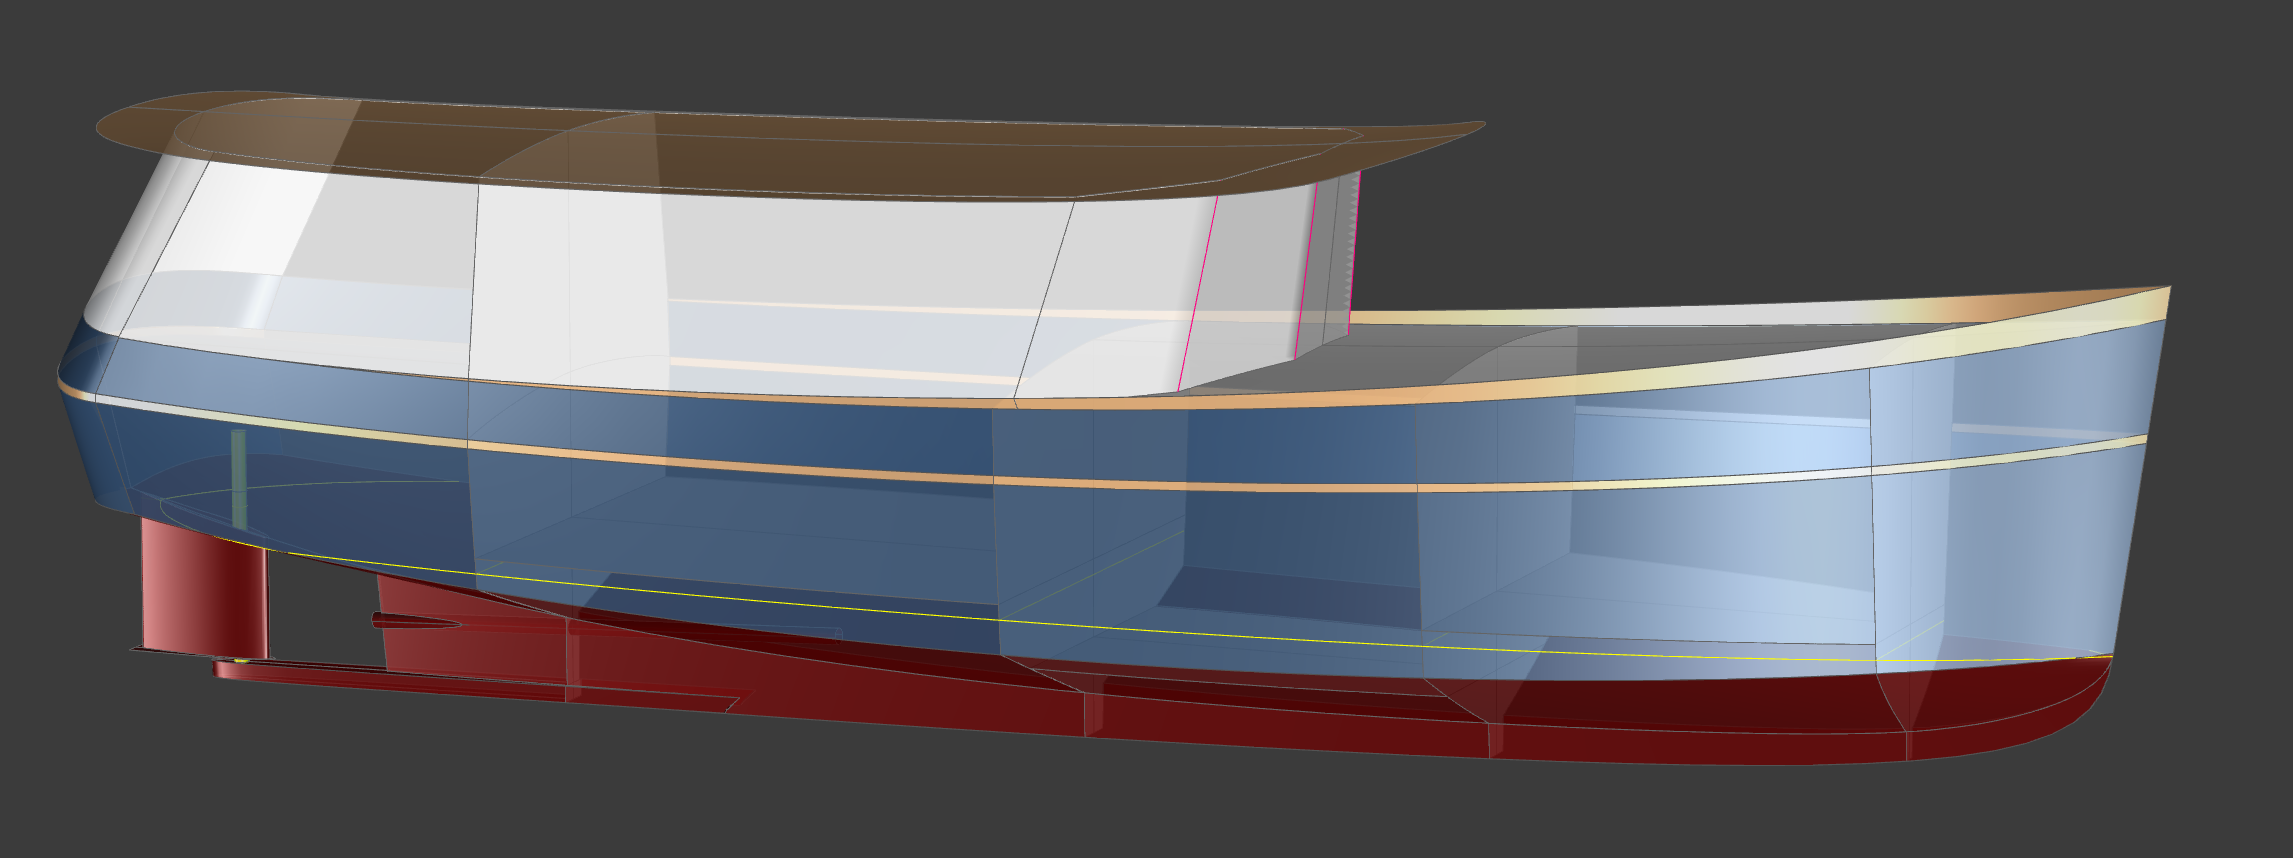 35' Big Ferdinand Trawler Yacht - Kasten Marine Design, Inc.